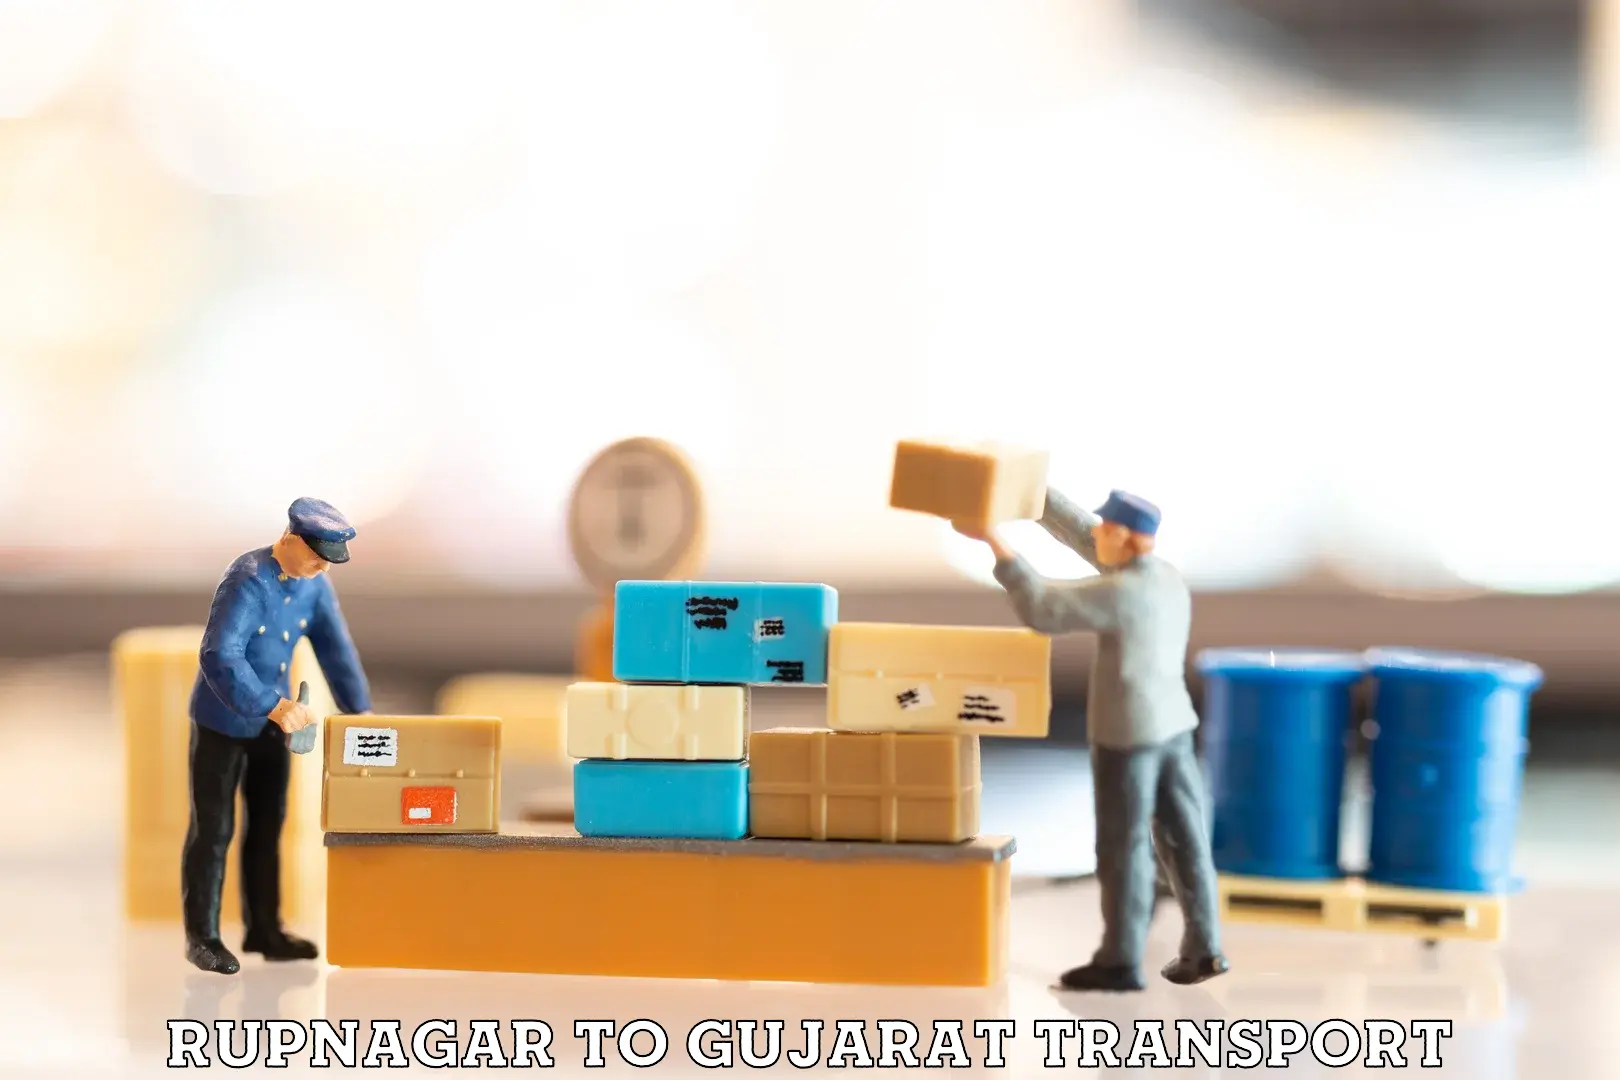 Transport in sharing Rupnagar to Gondal